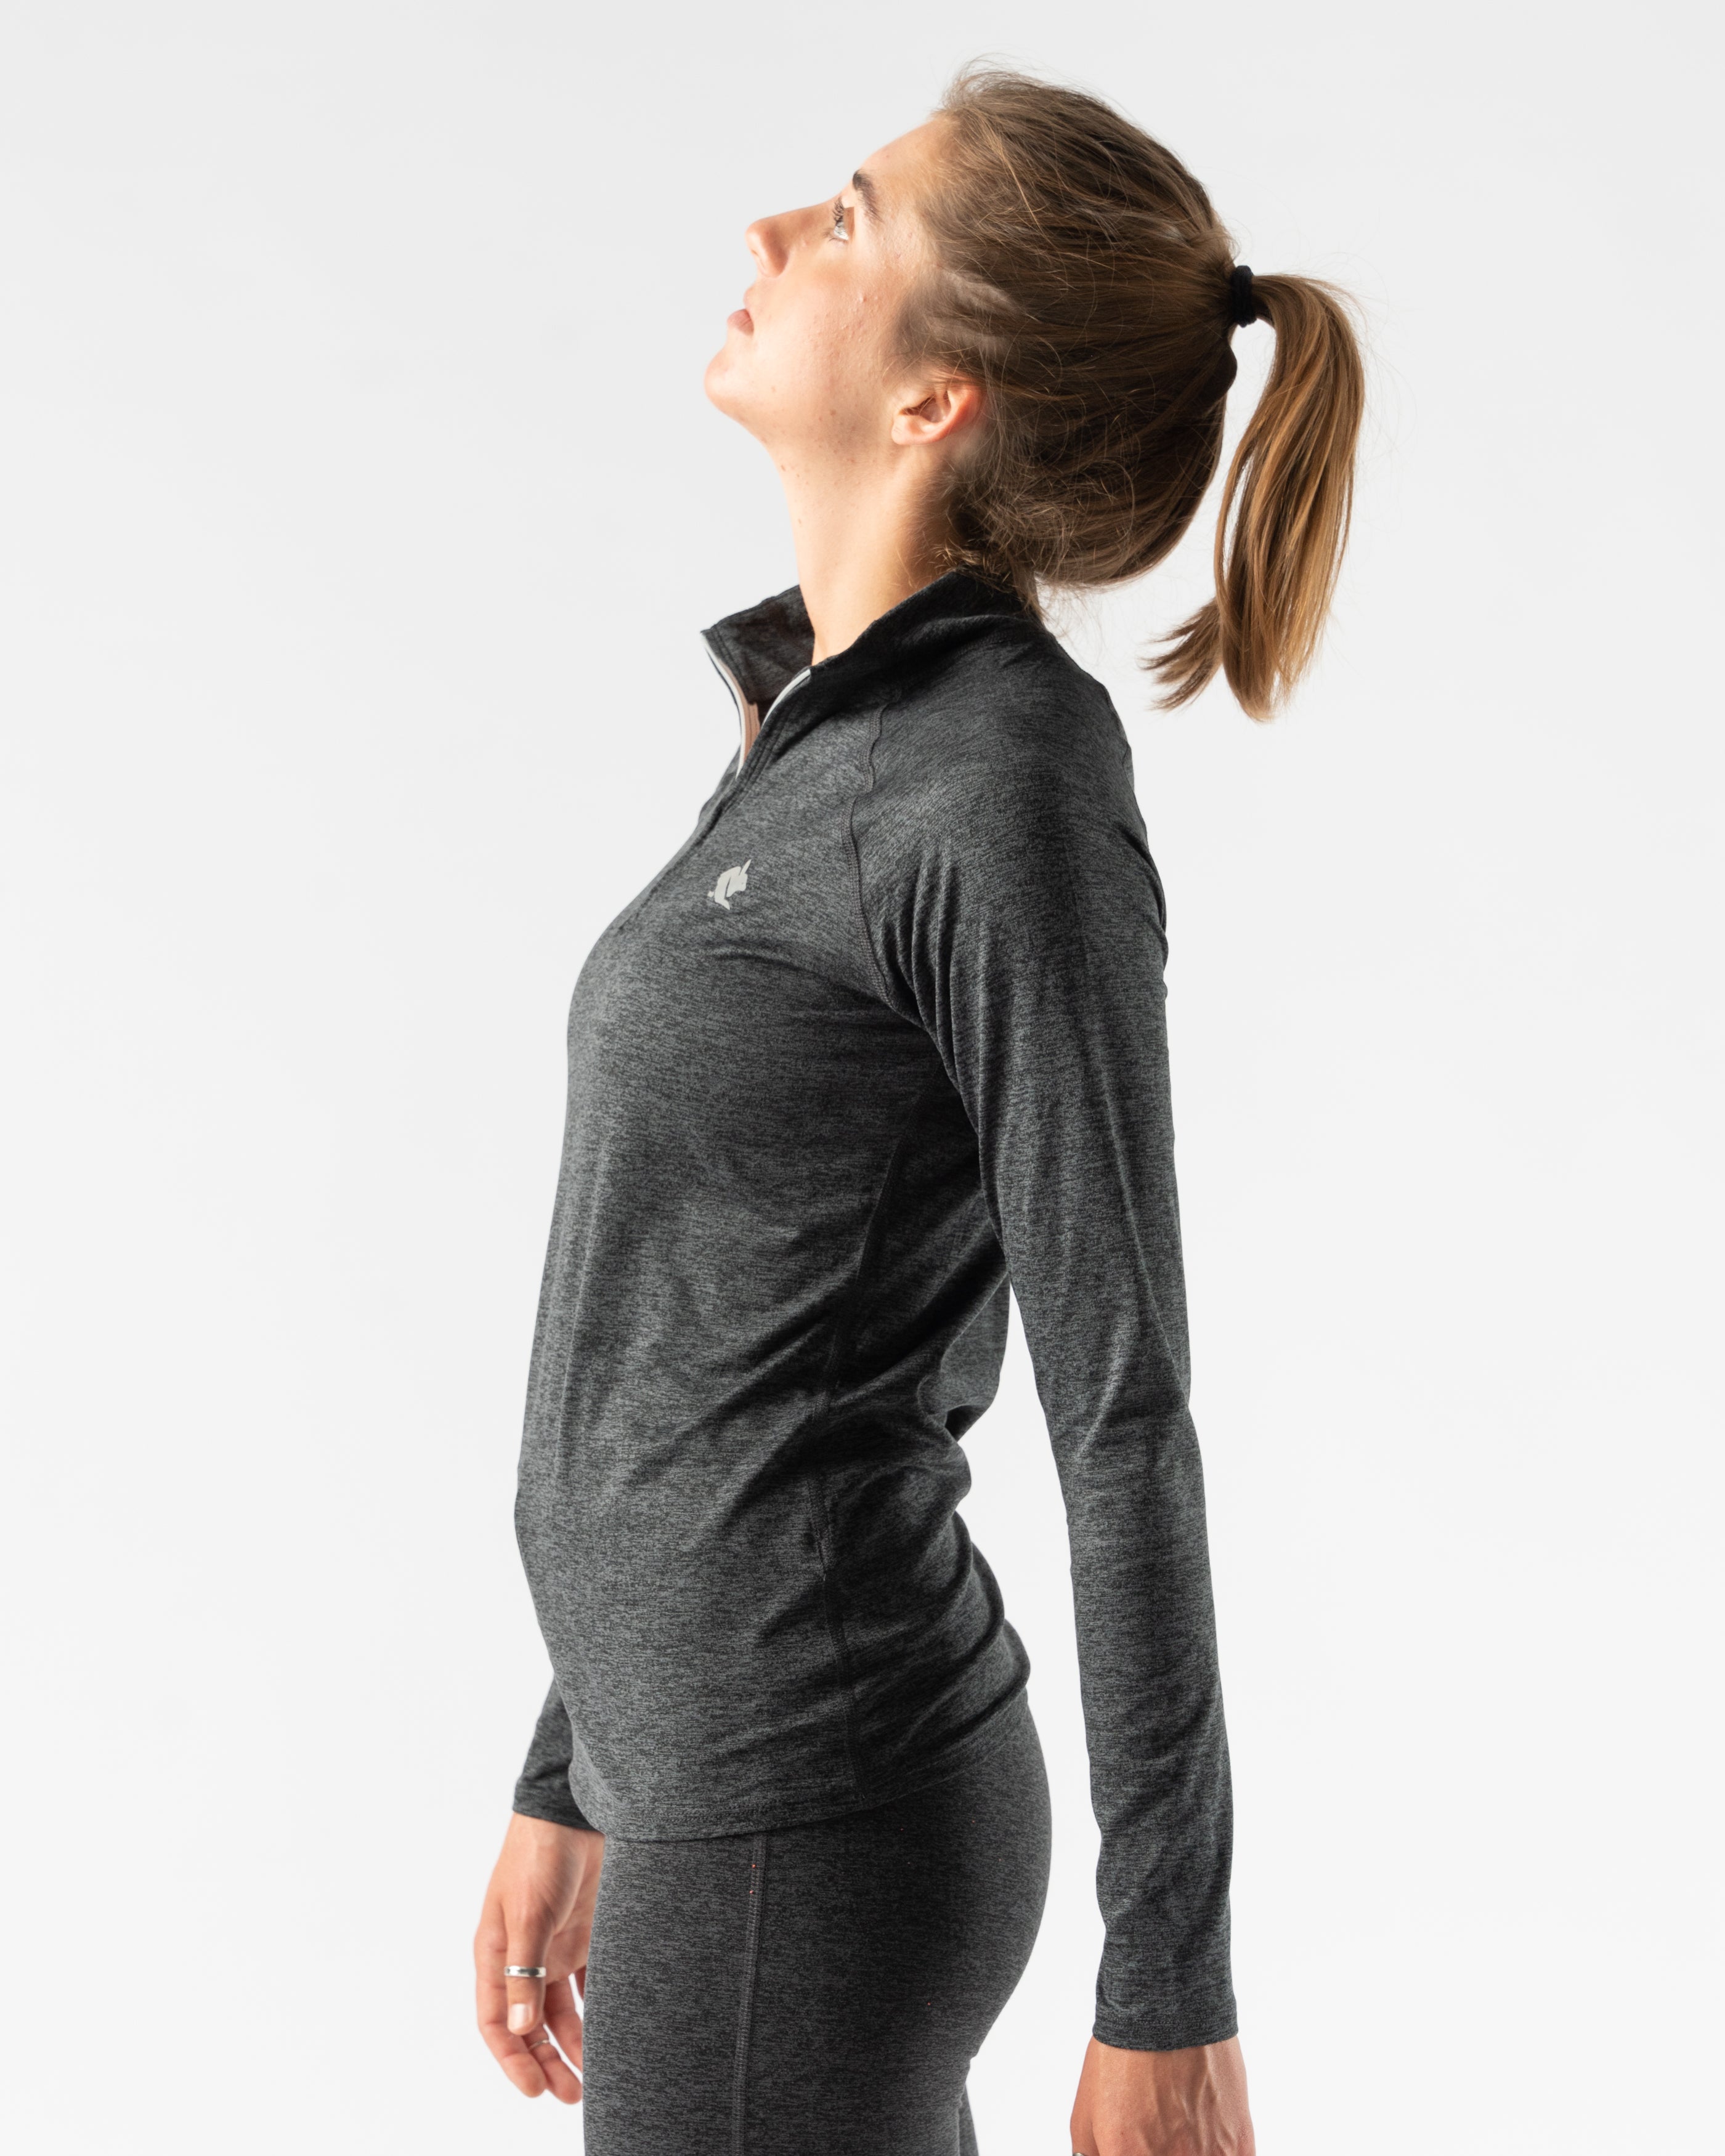 Long Sleeve Workout Tshirt - Ez Zip 2.0 - rabbit